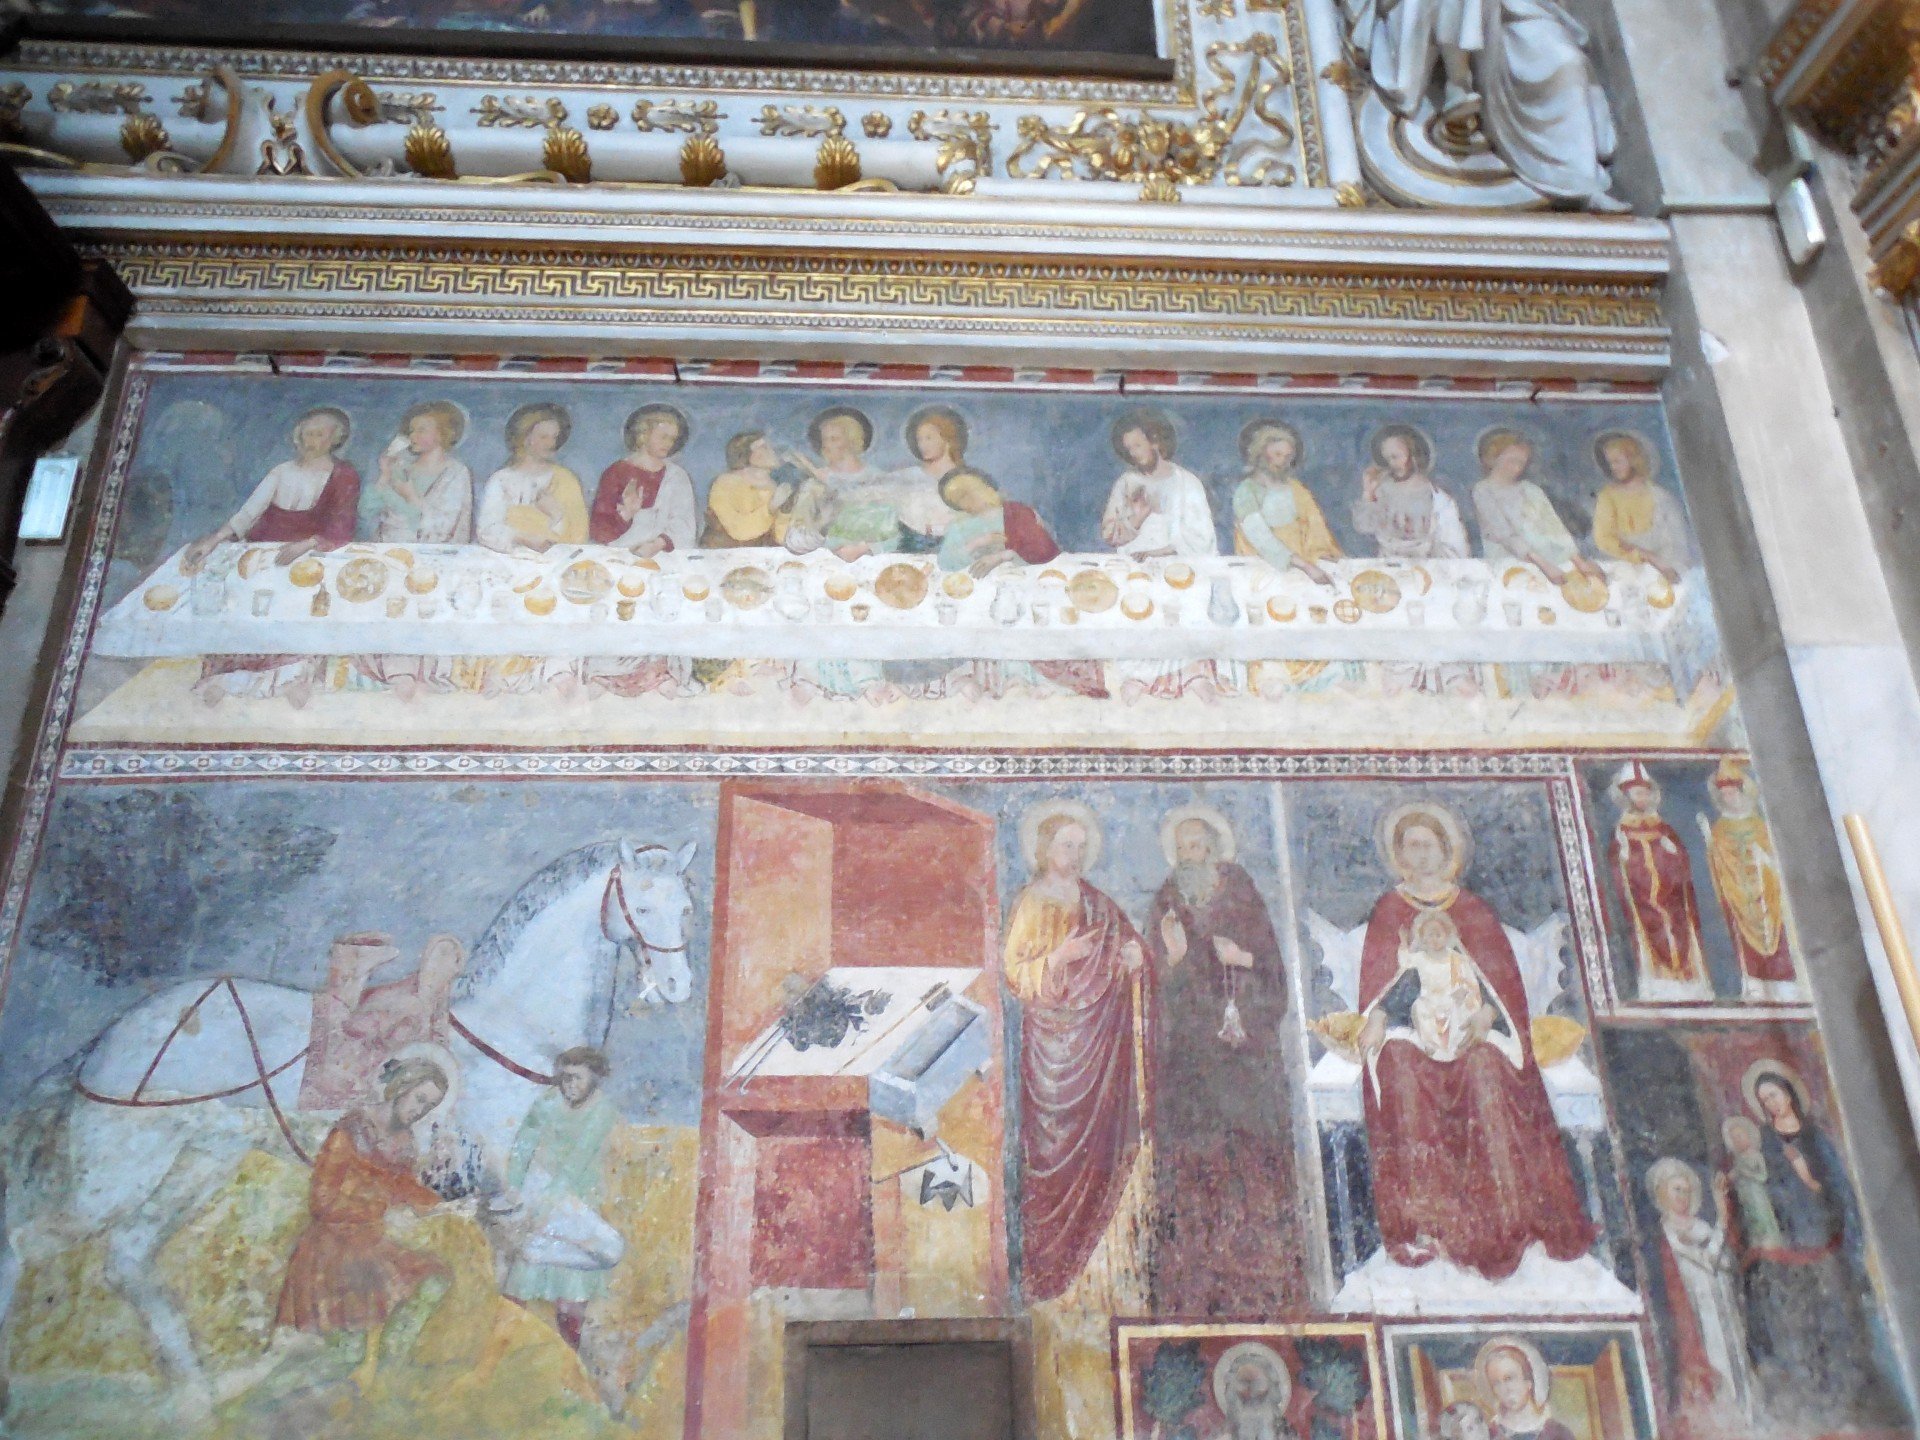 Bergamo, Basilica di Santa Maria Maggiore . Frescoes depicting the Last Supper and Stories of St. Eligius, XIV century